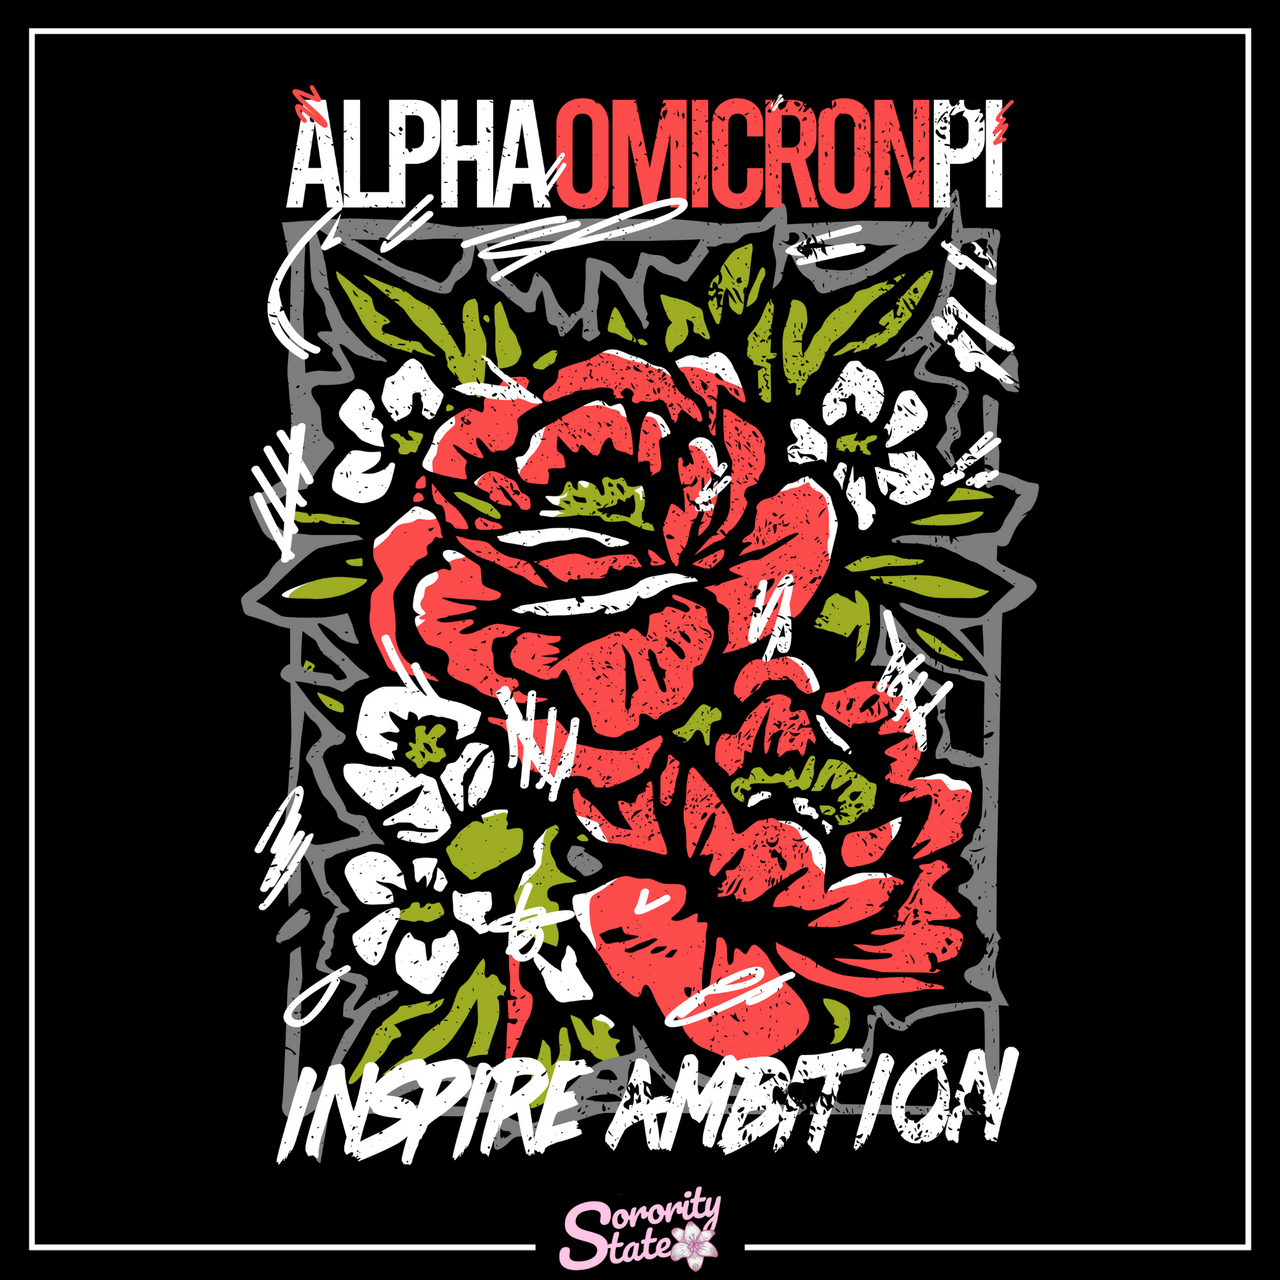 Alpha Omicron Pi Graphic T-Shirt | Grunge Roses